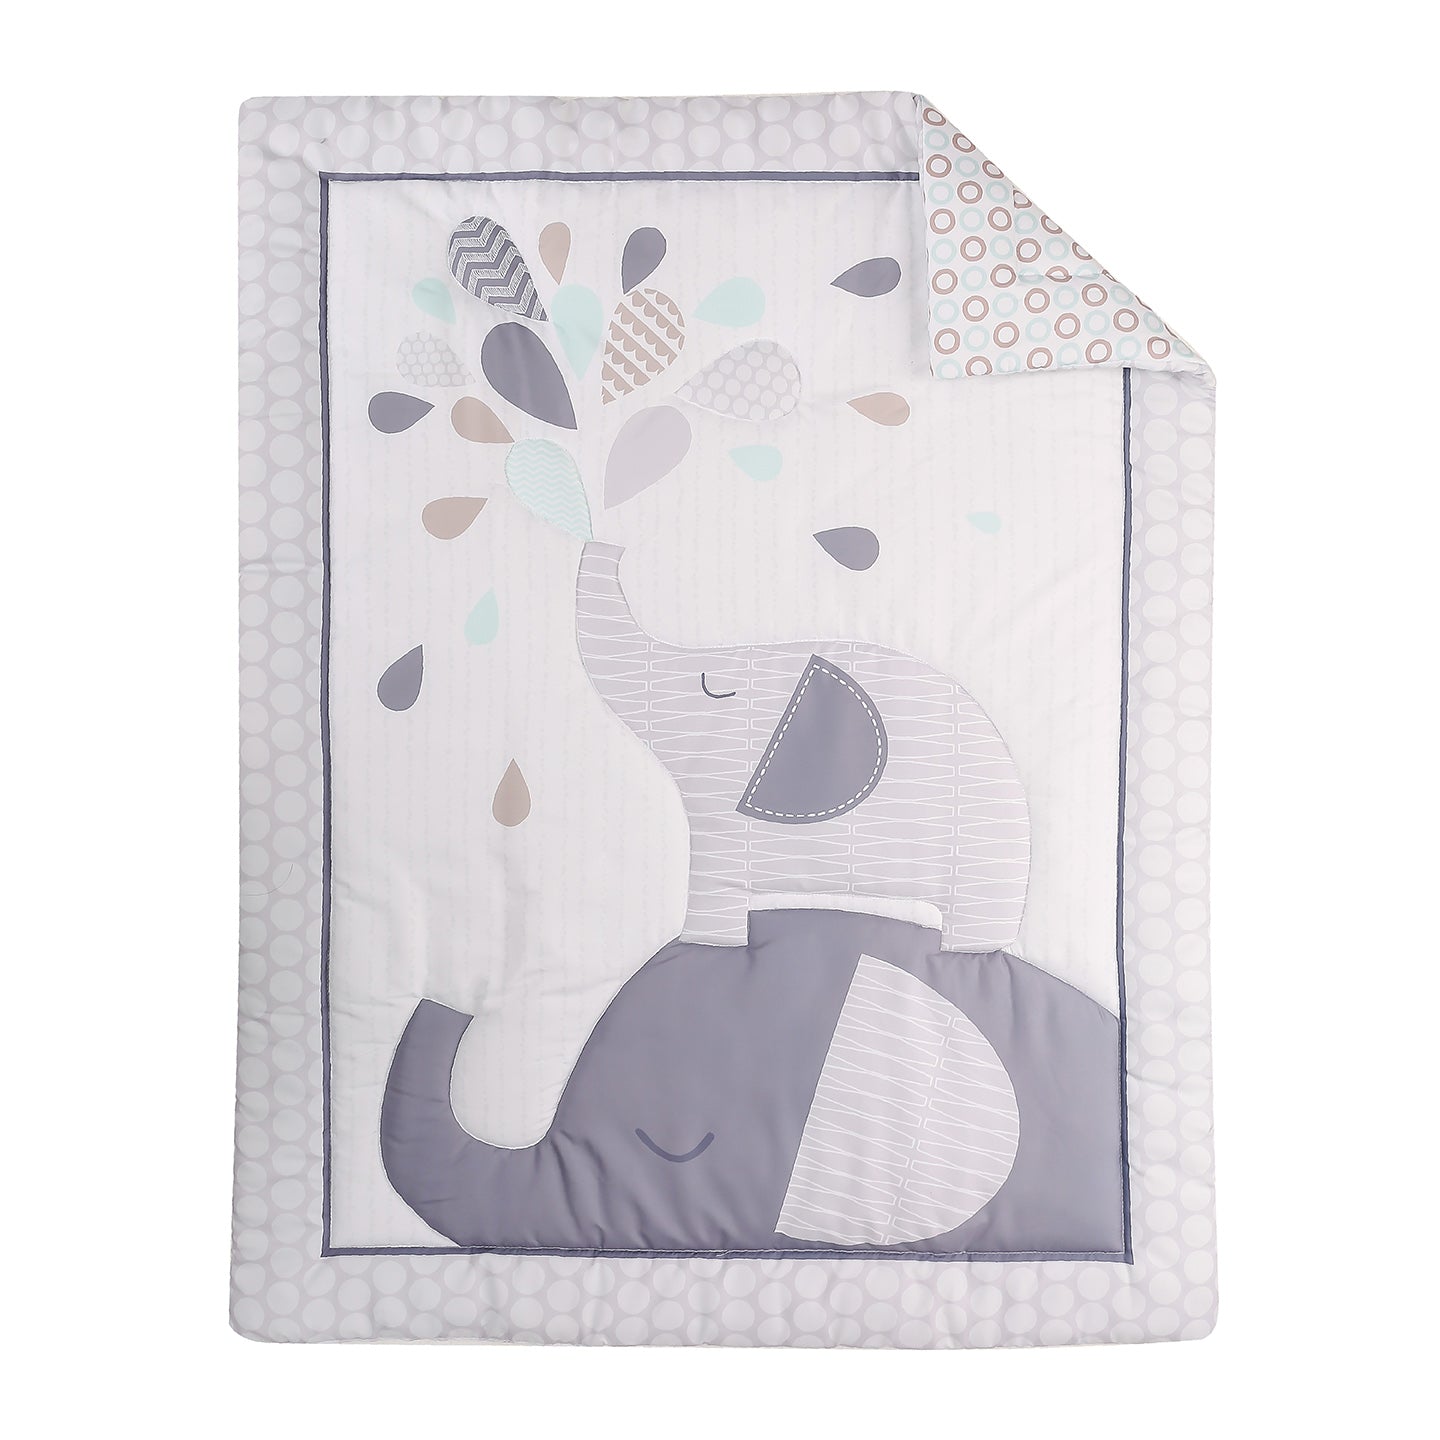 Snuggletime 3-Piece Quilt Set - Grey Elephant